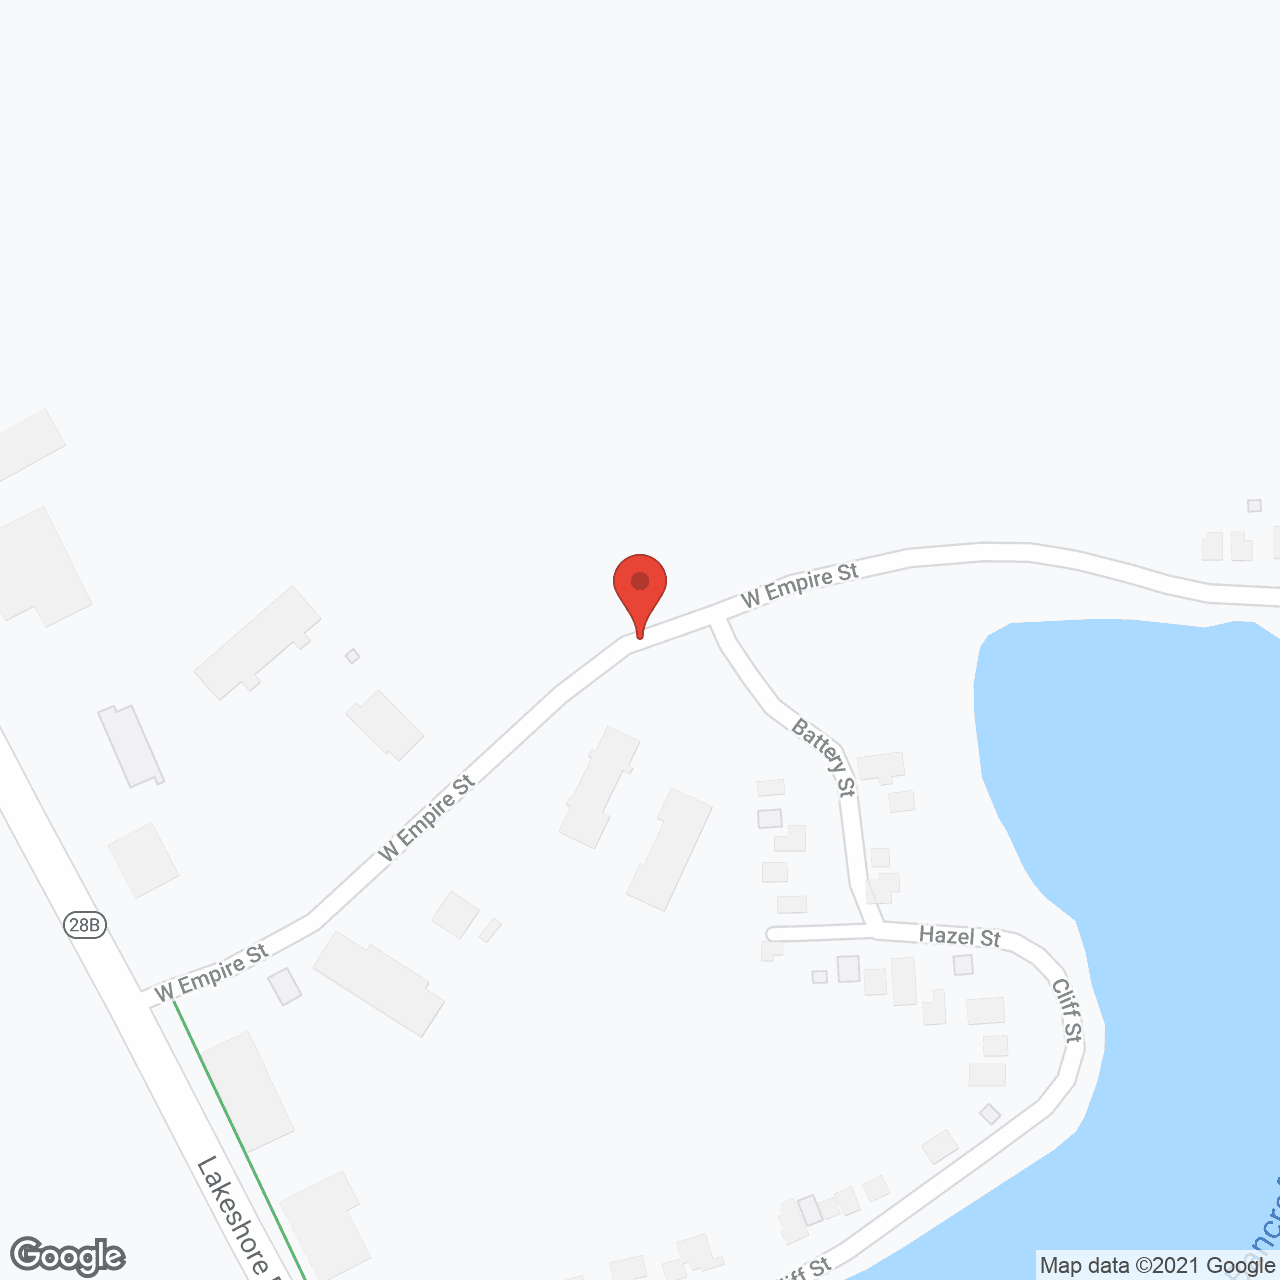 Canda Manor in google map